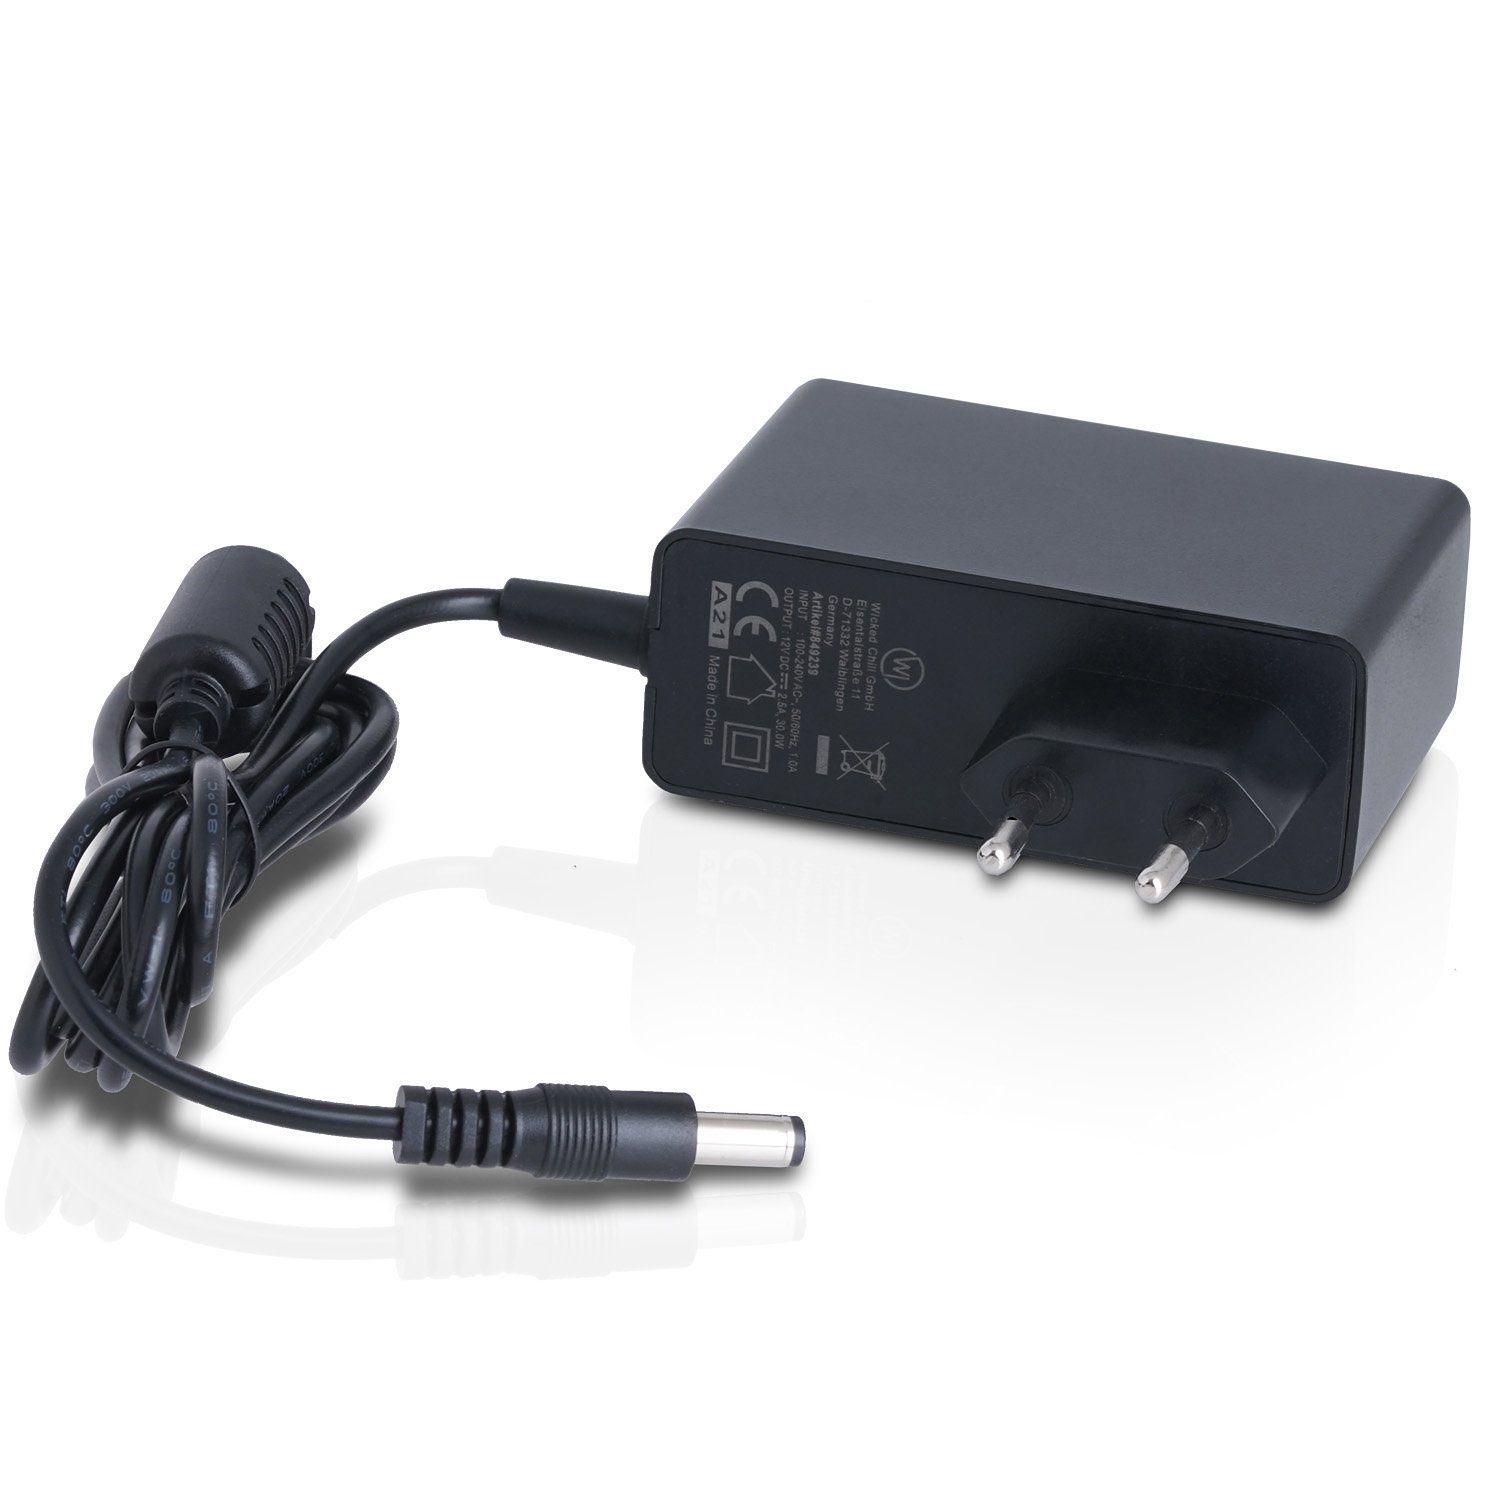 Ladegerät für Bose SoundLink Mini Bluetooth Speaker Ladekabel 12V/1500mA,1,5m 